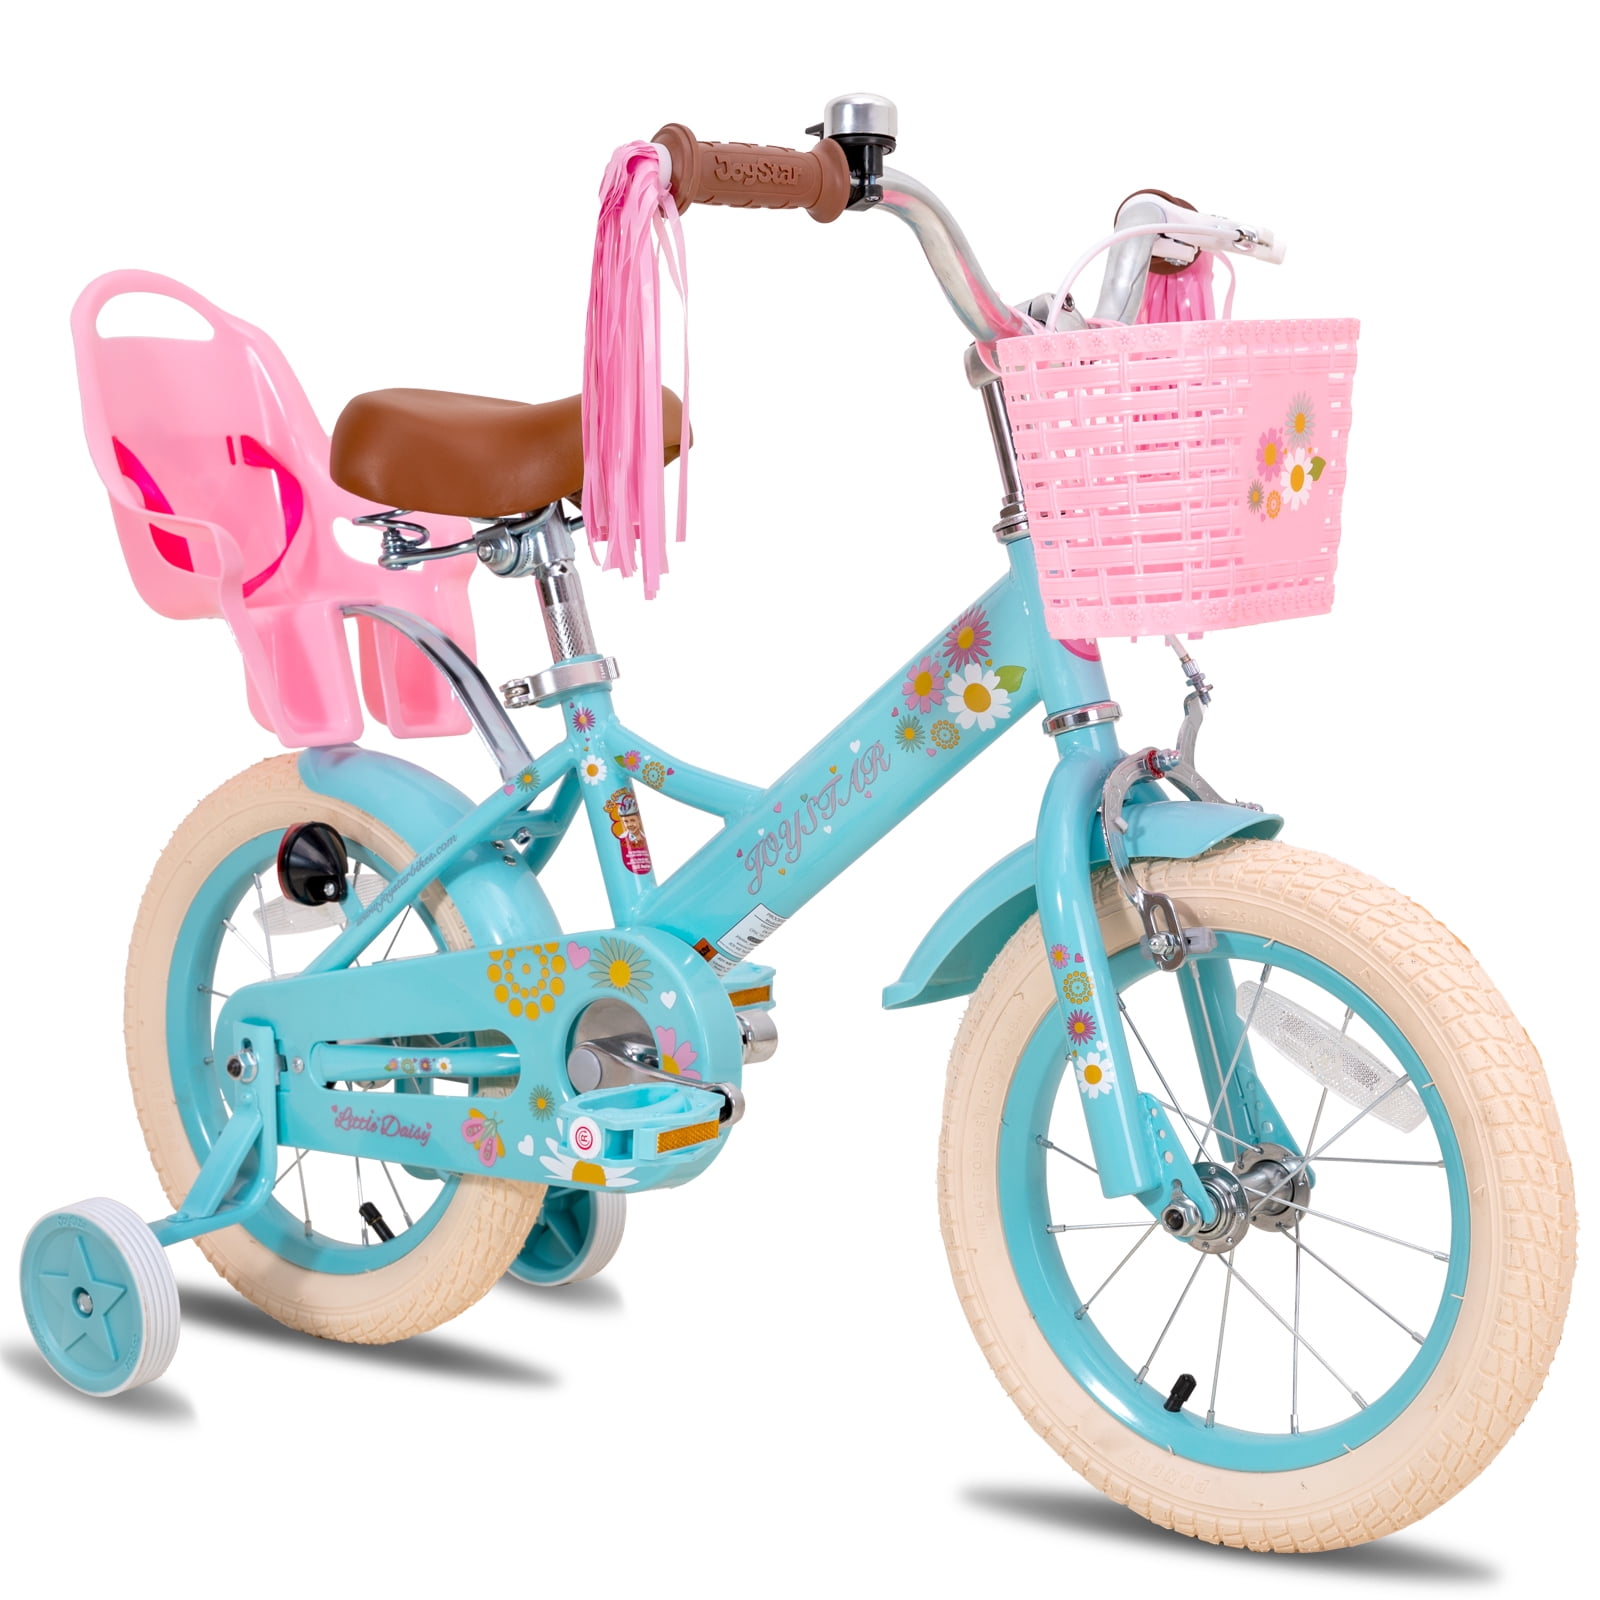 JOYSTAR Little Daisy 14 Inch Kids Bike for 3 4 5 Years Girls with Handbrake Children Princess Bicycle with Training Wheels Basket Streamer Toddler Cycle Bikes Blue